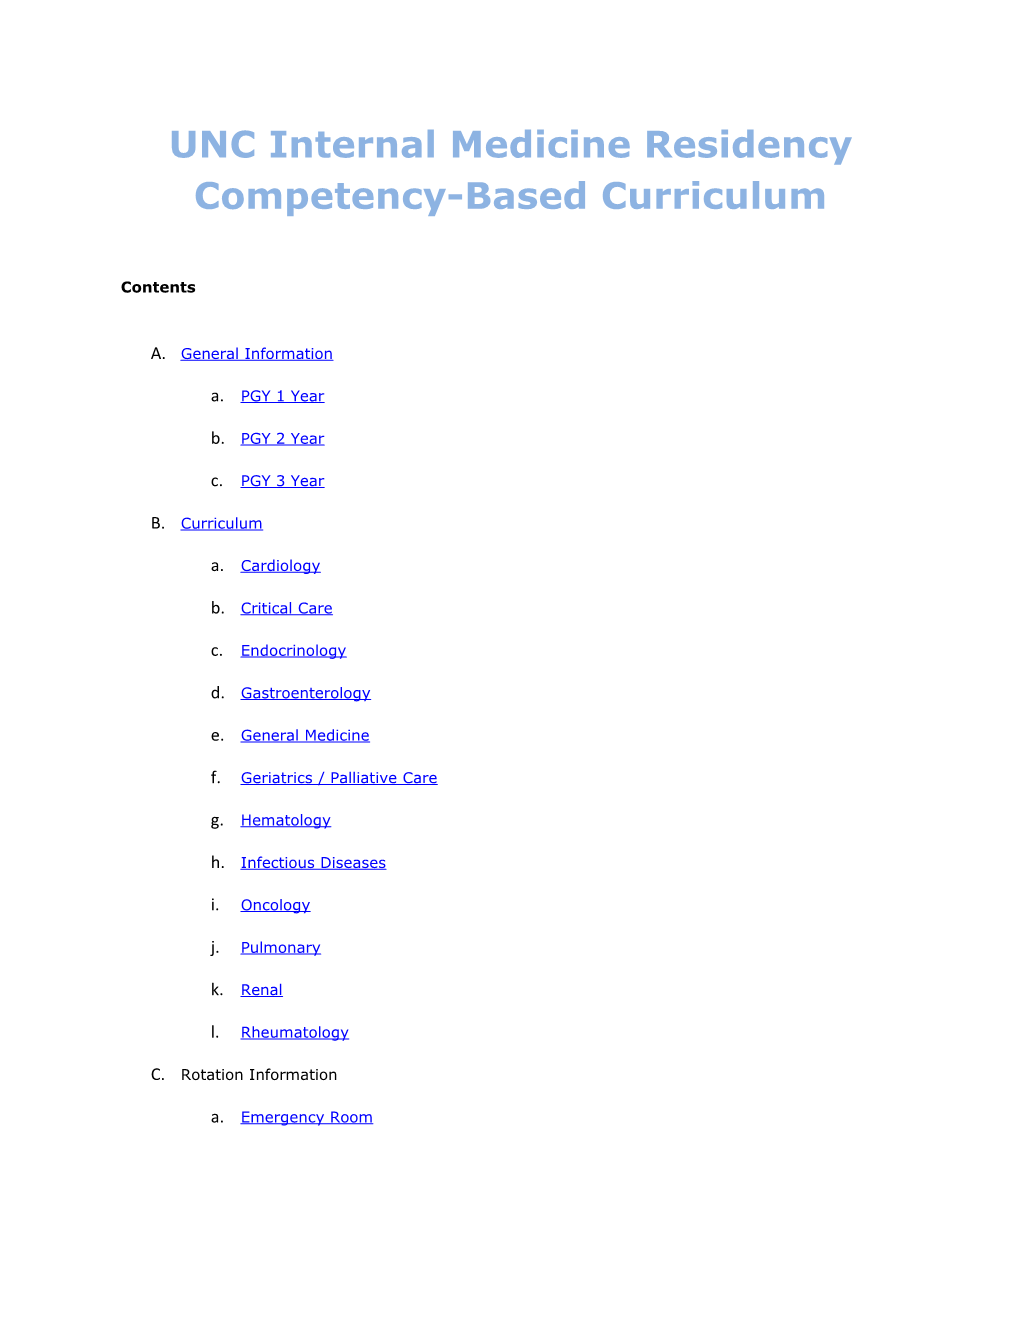 UNC Internal Medicine Residency Competency-Based Curriculum